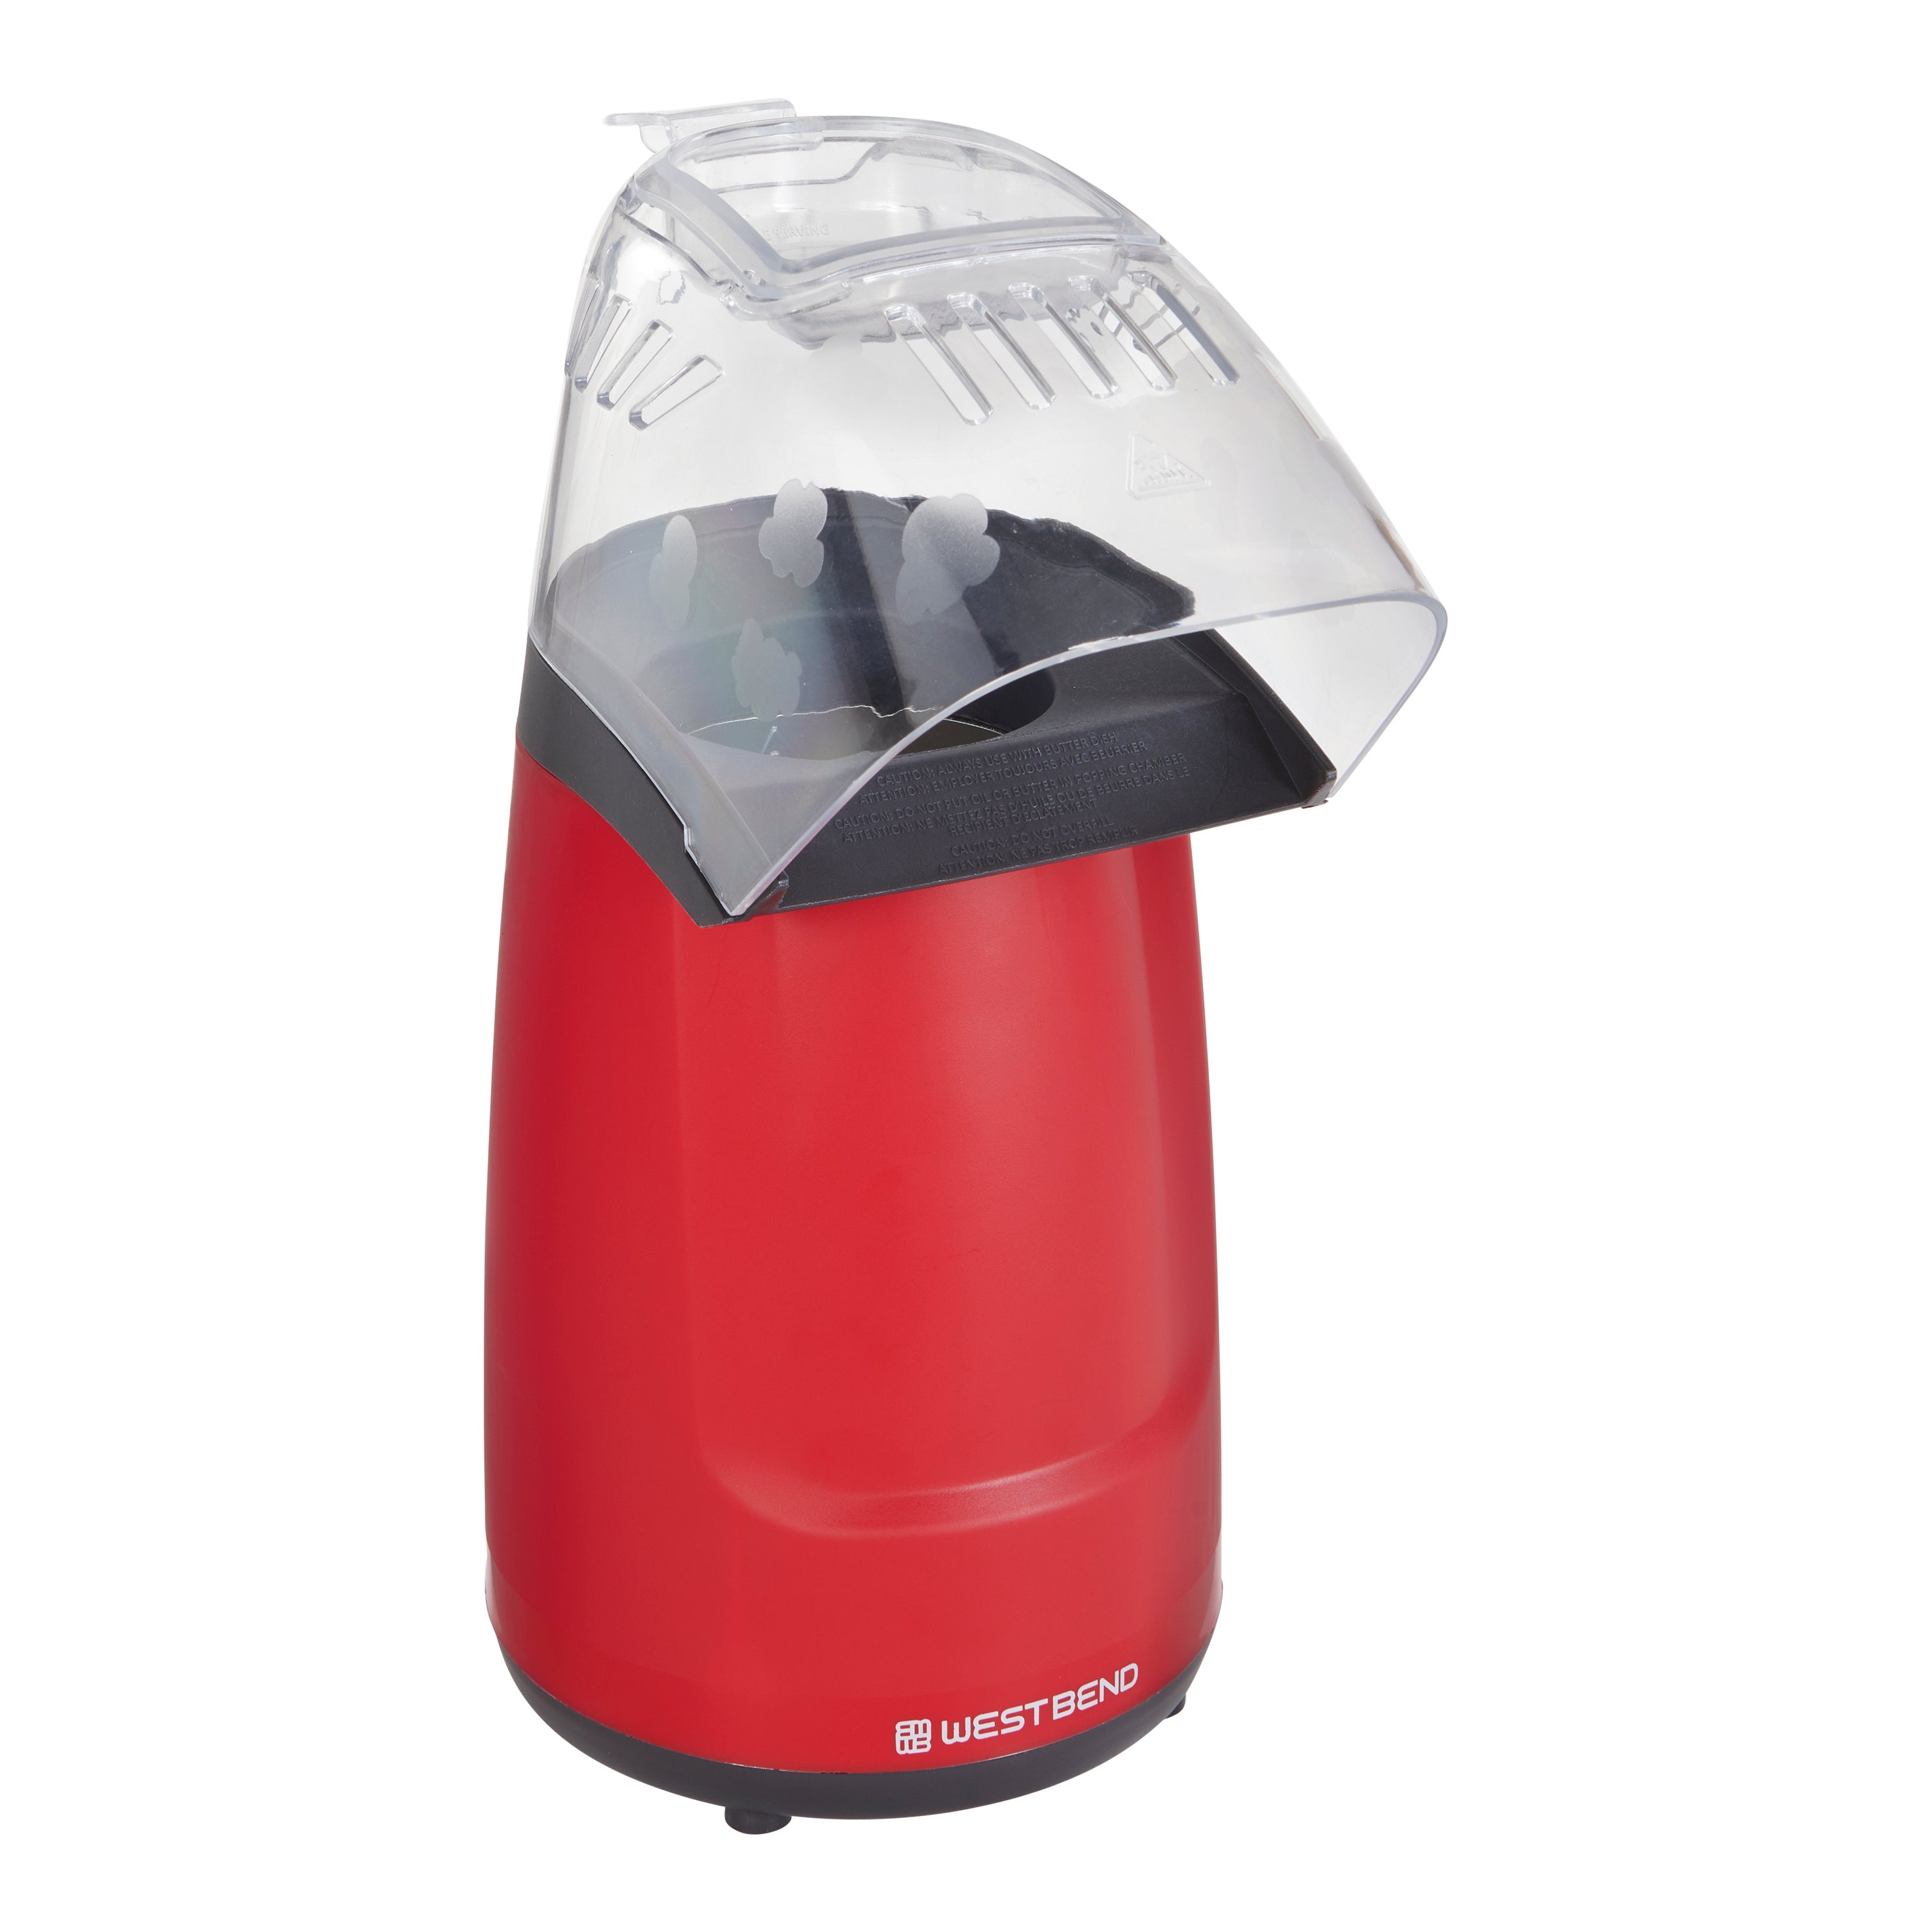 West Bend 82418R Air Crazy 4-Quart Hot Air Popcorn Popper, Red – JADA  Lifestyles